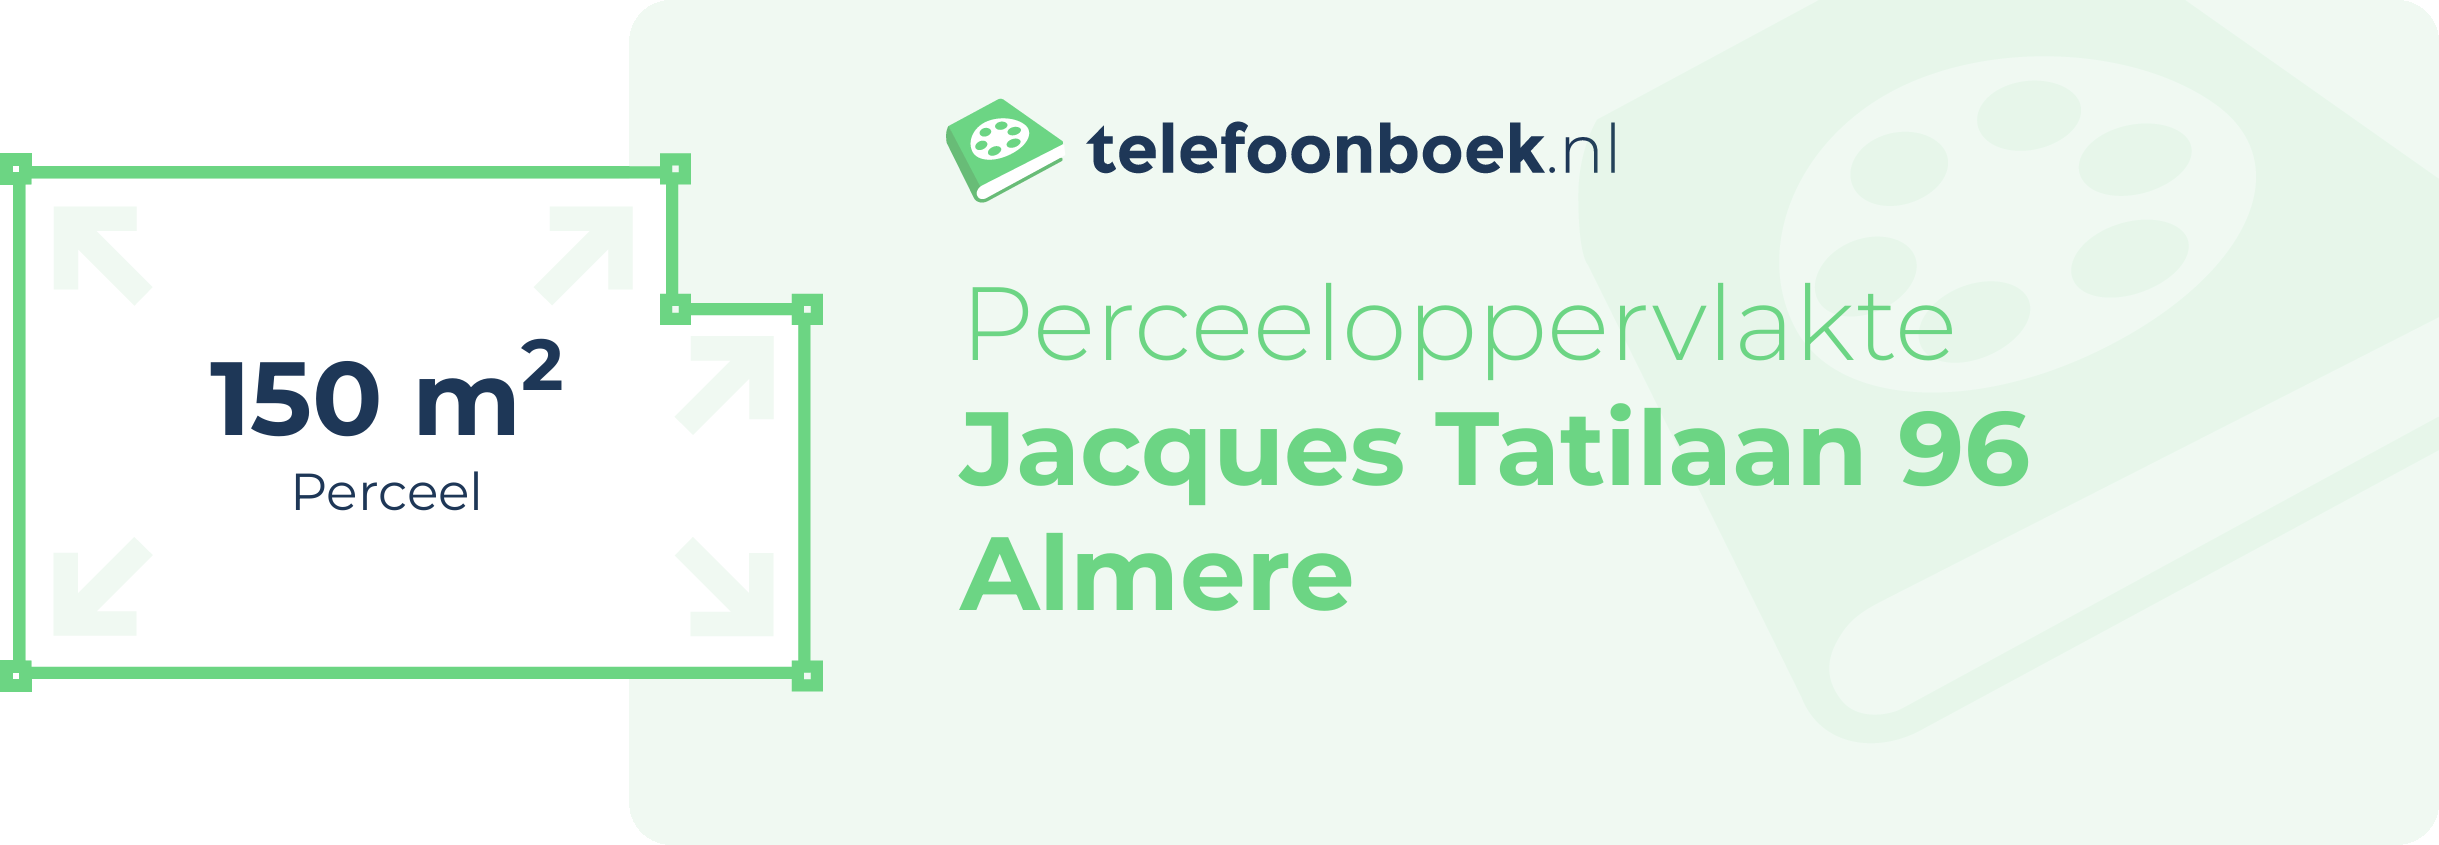 Perceeloppervlakte Jacques Tatilaan 96 Almere